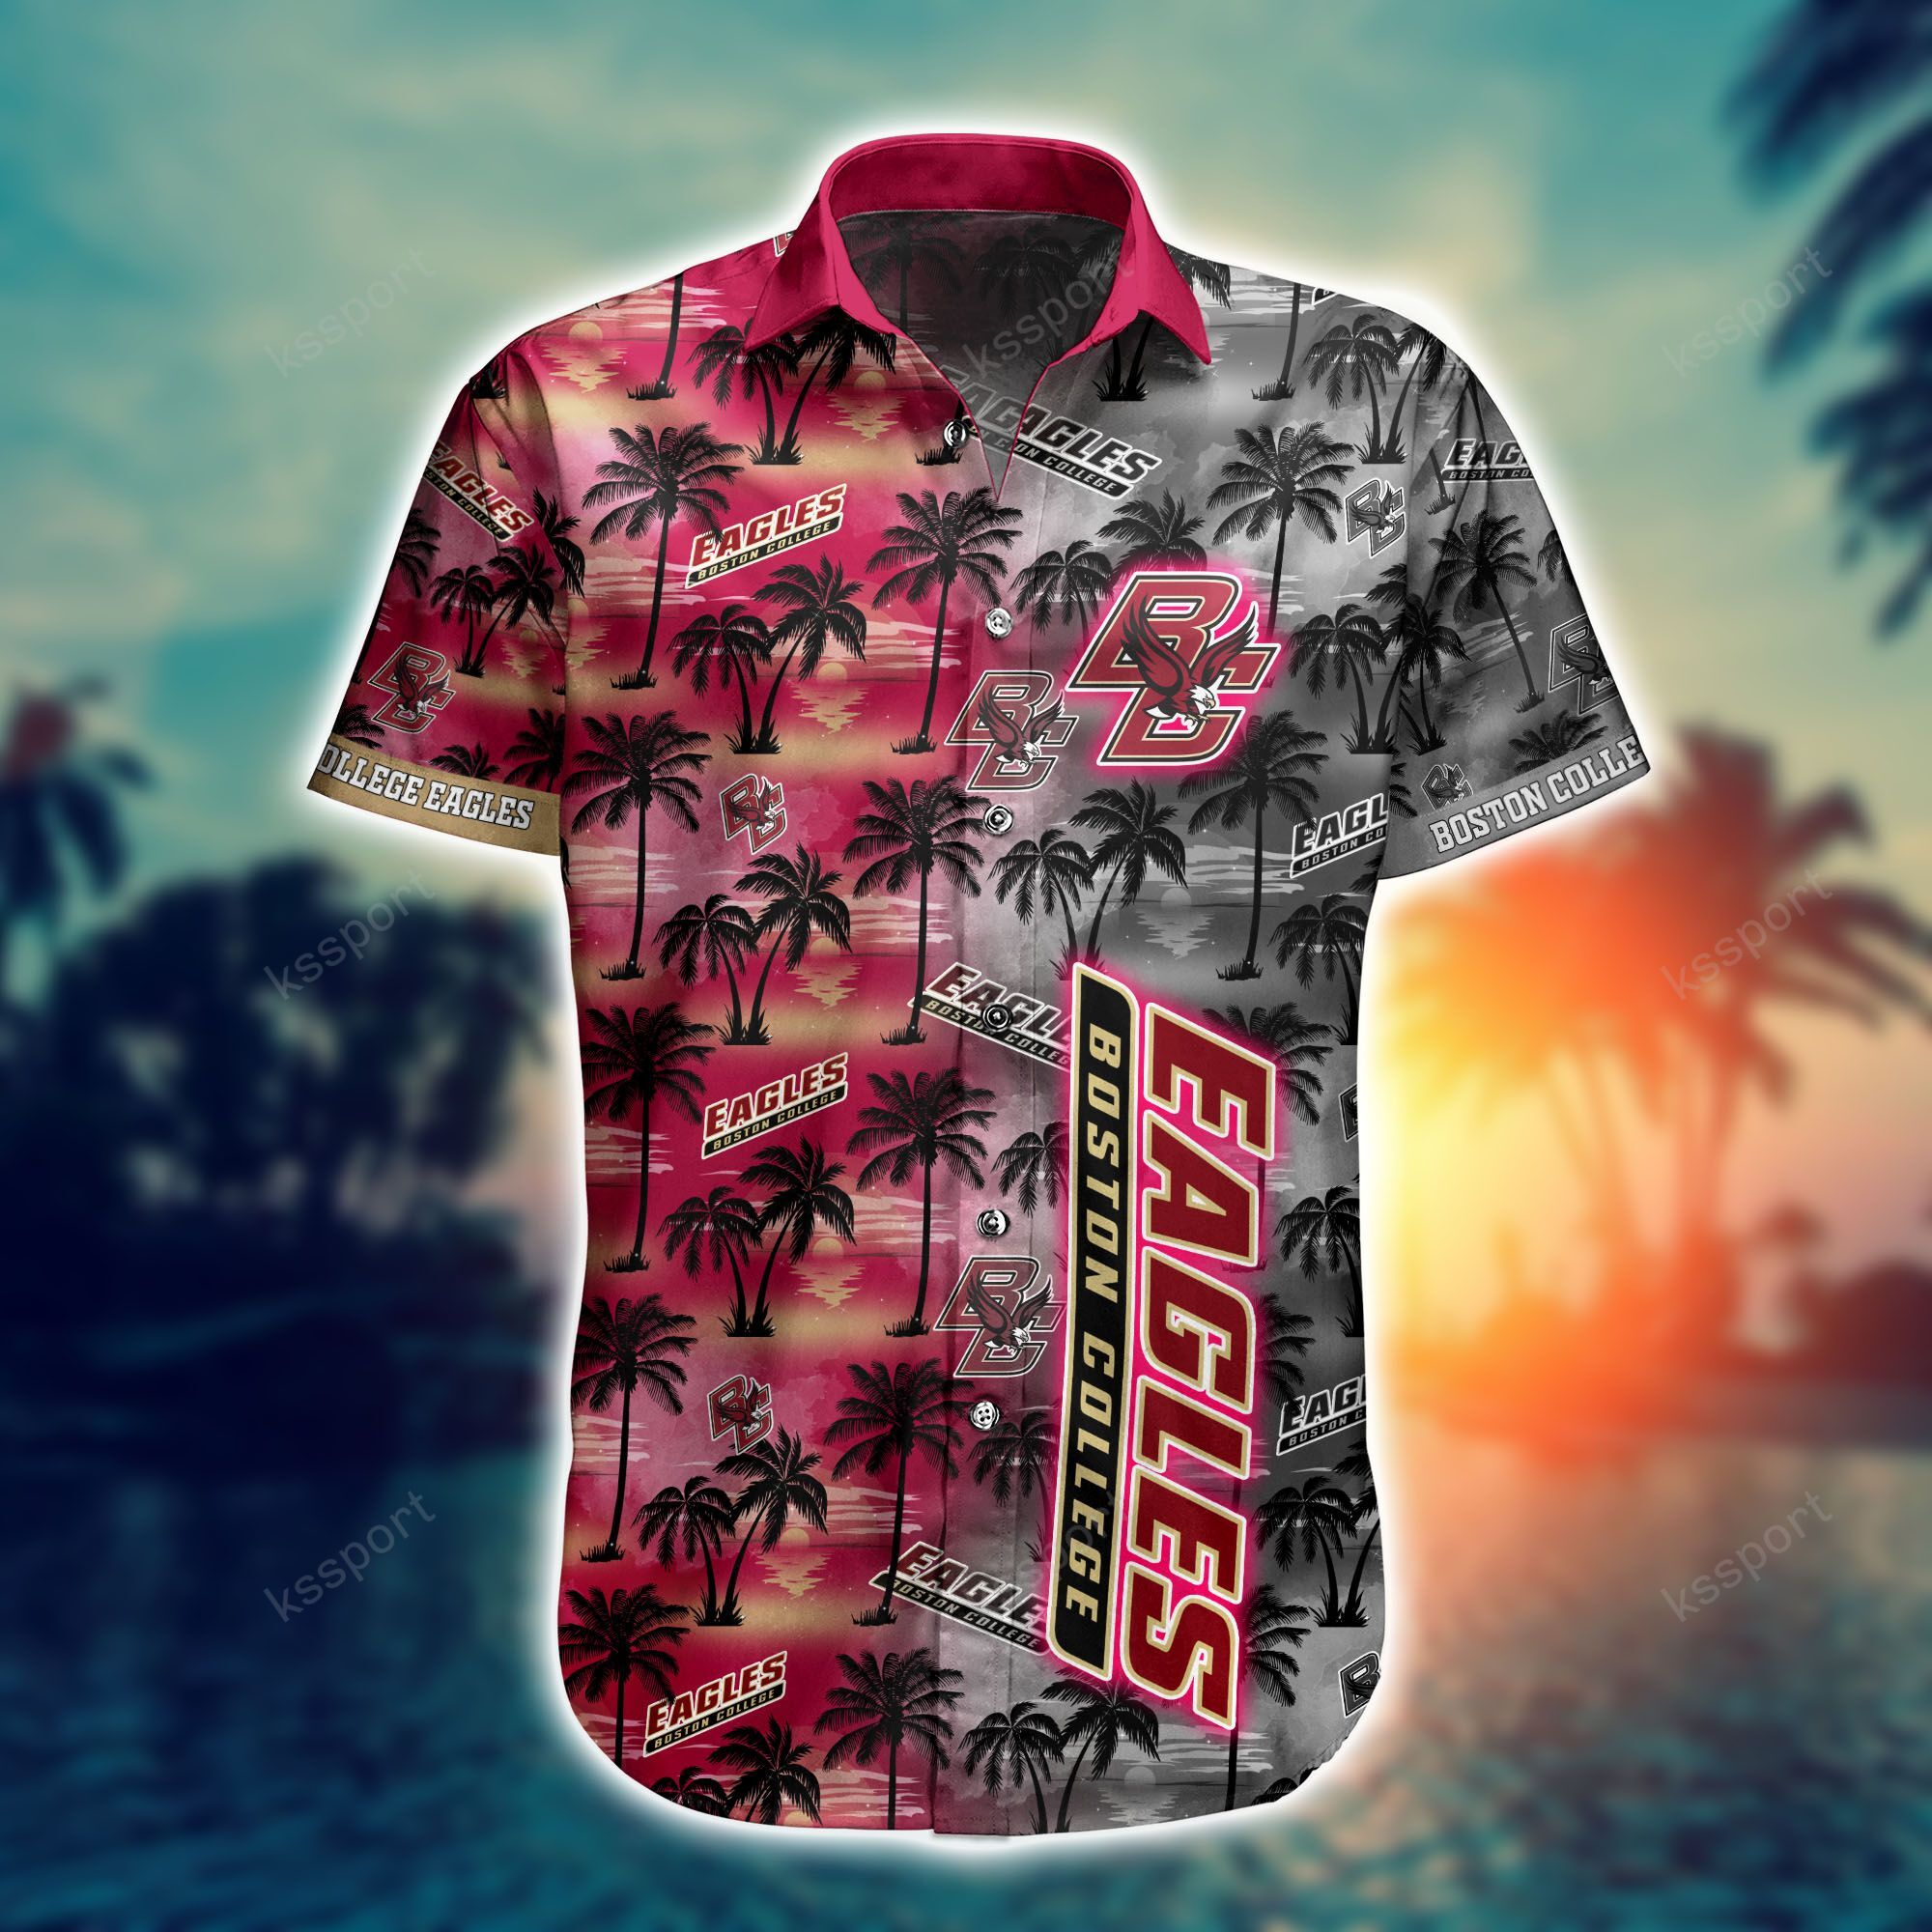 Hawaiian shirt and shorts is a great way to look stylish at a beach party 4